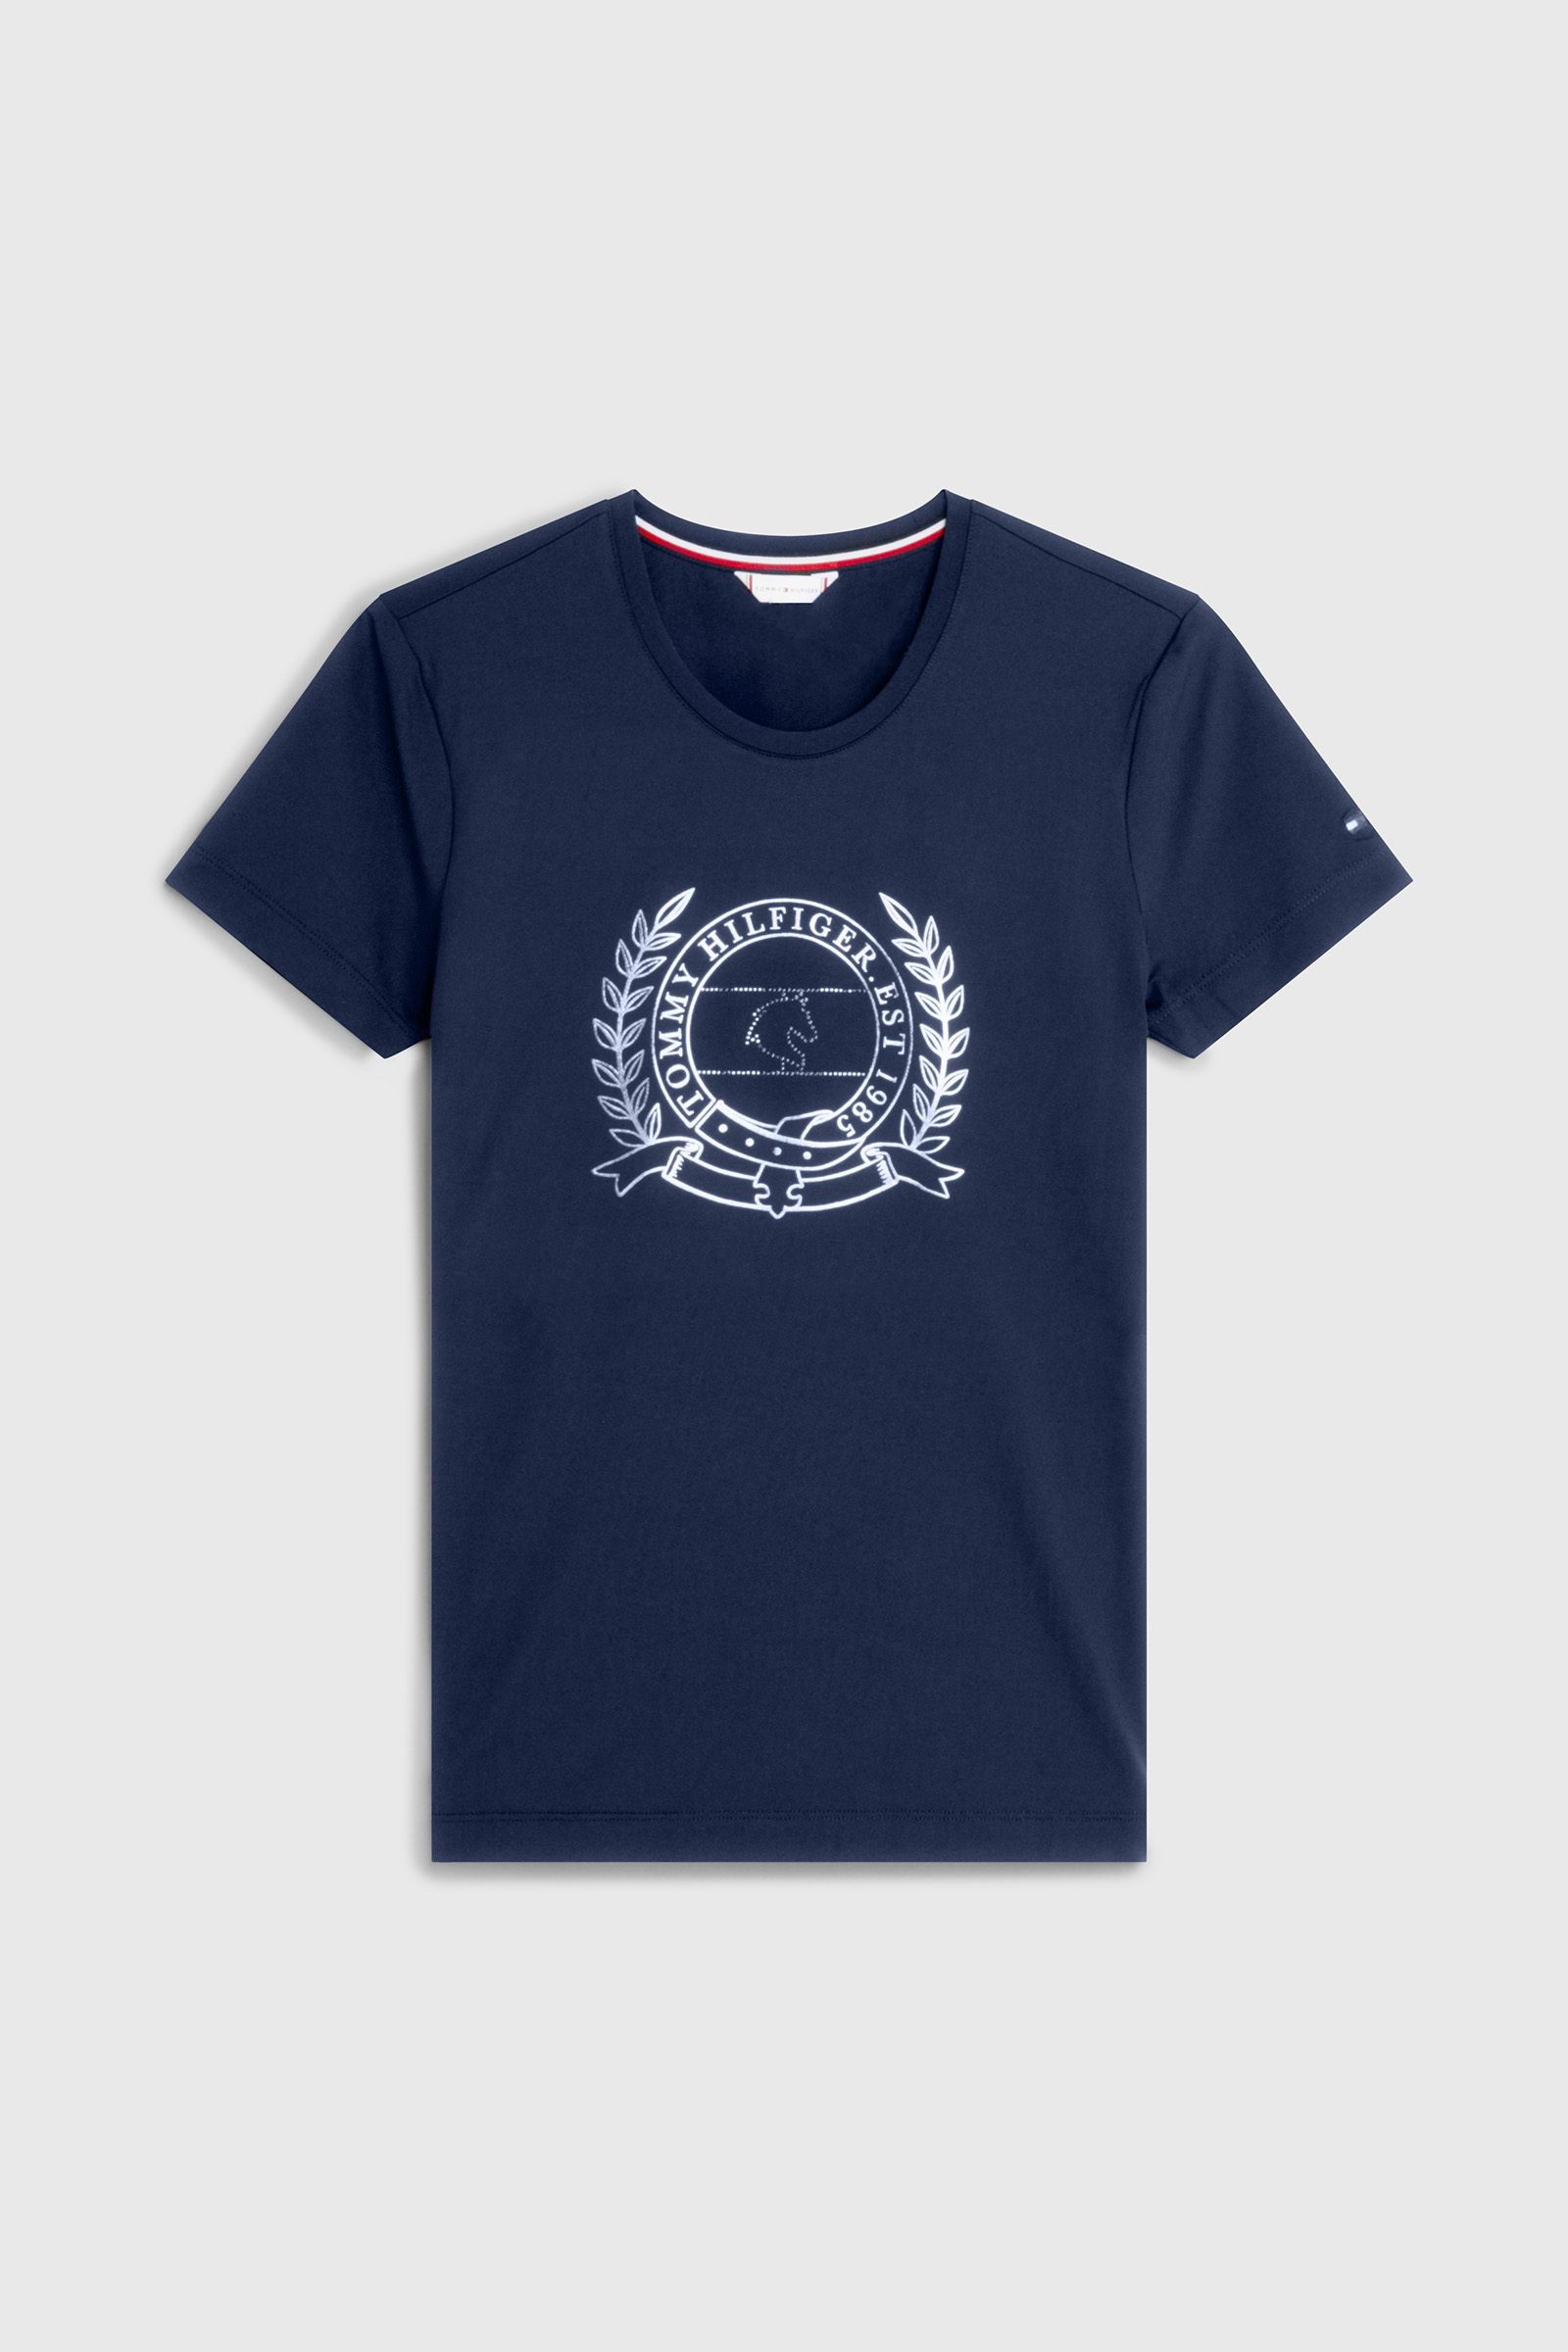 Tommy Hilfiger Women's Rhinestone T-Shirt - Blue Coast